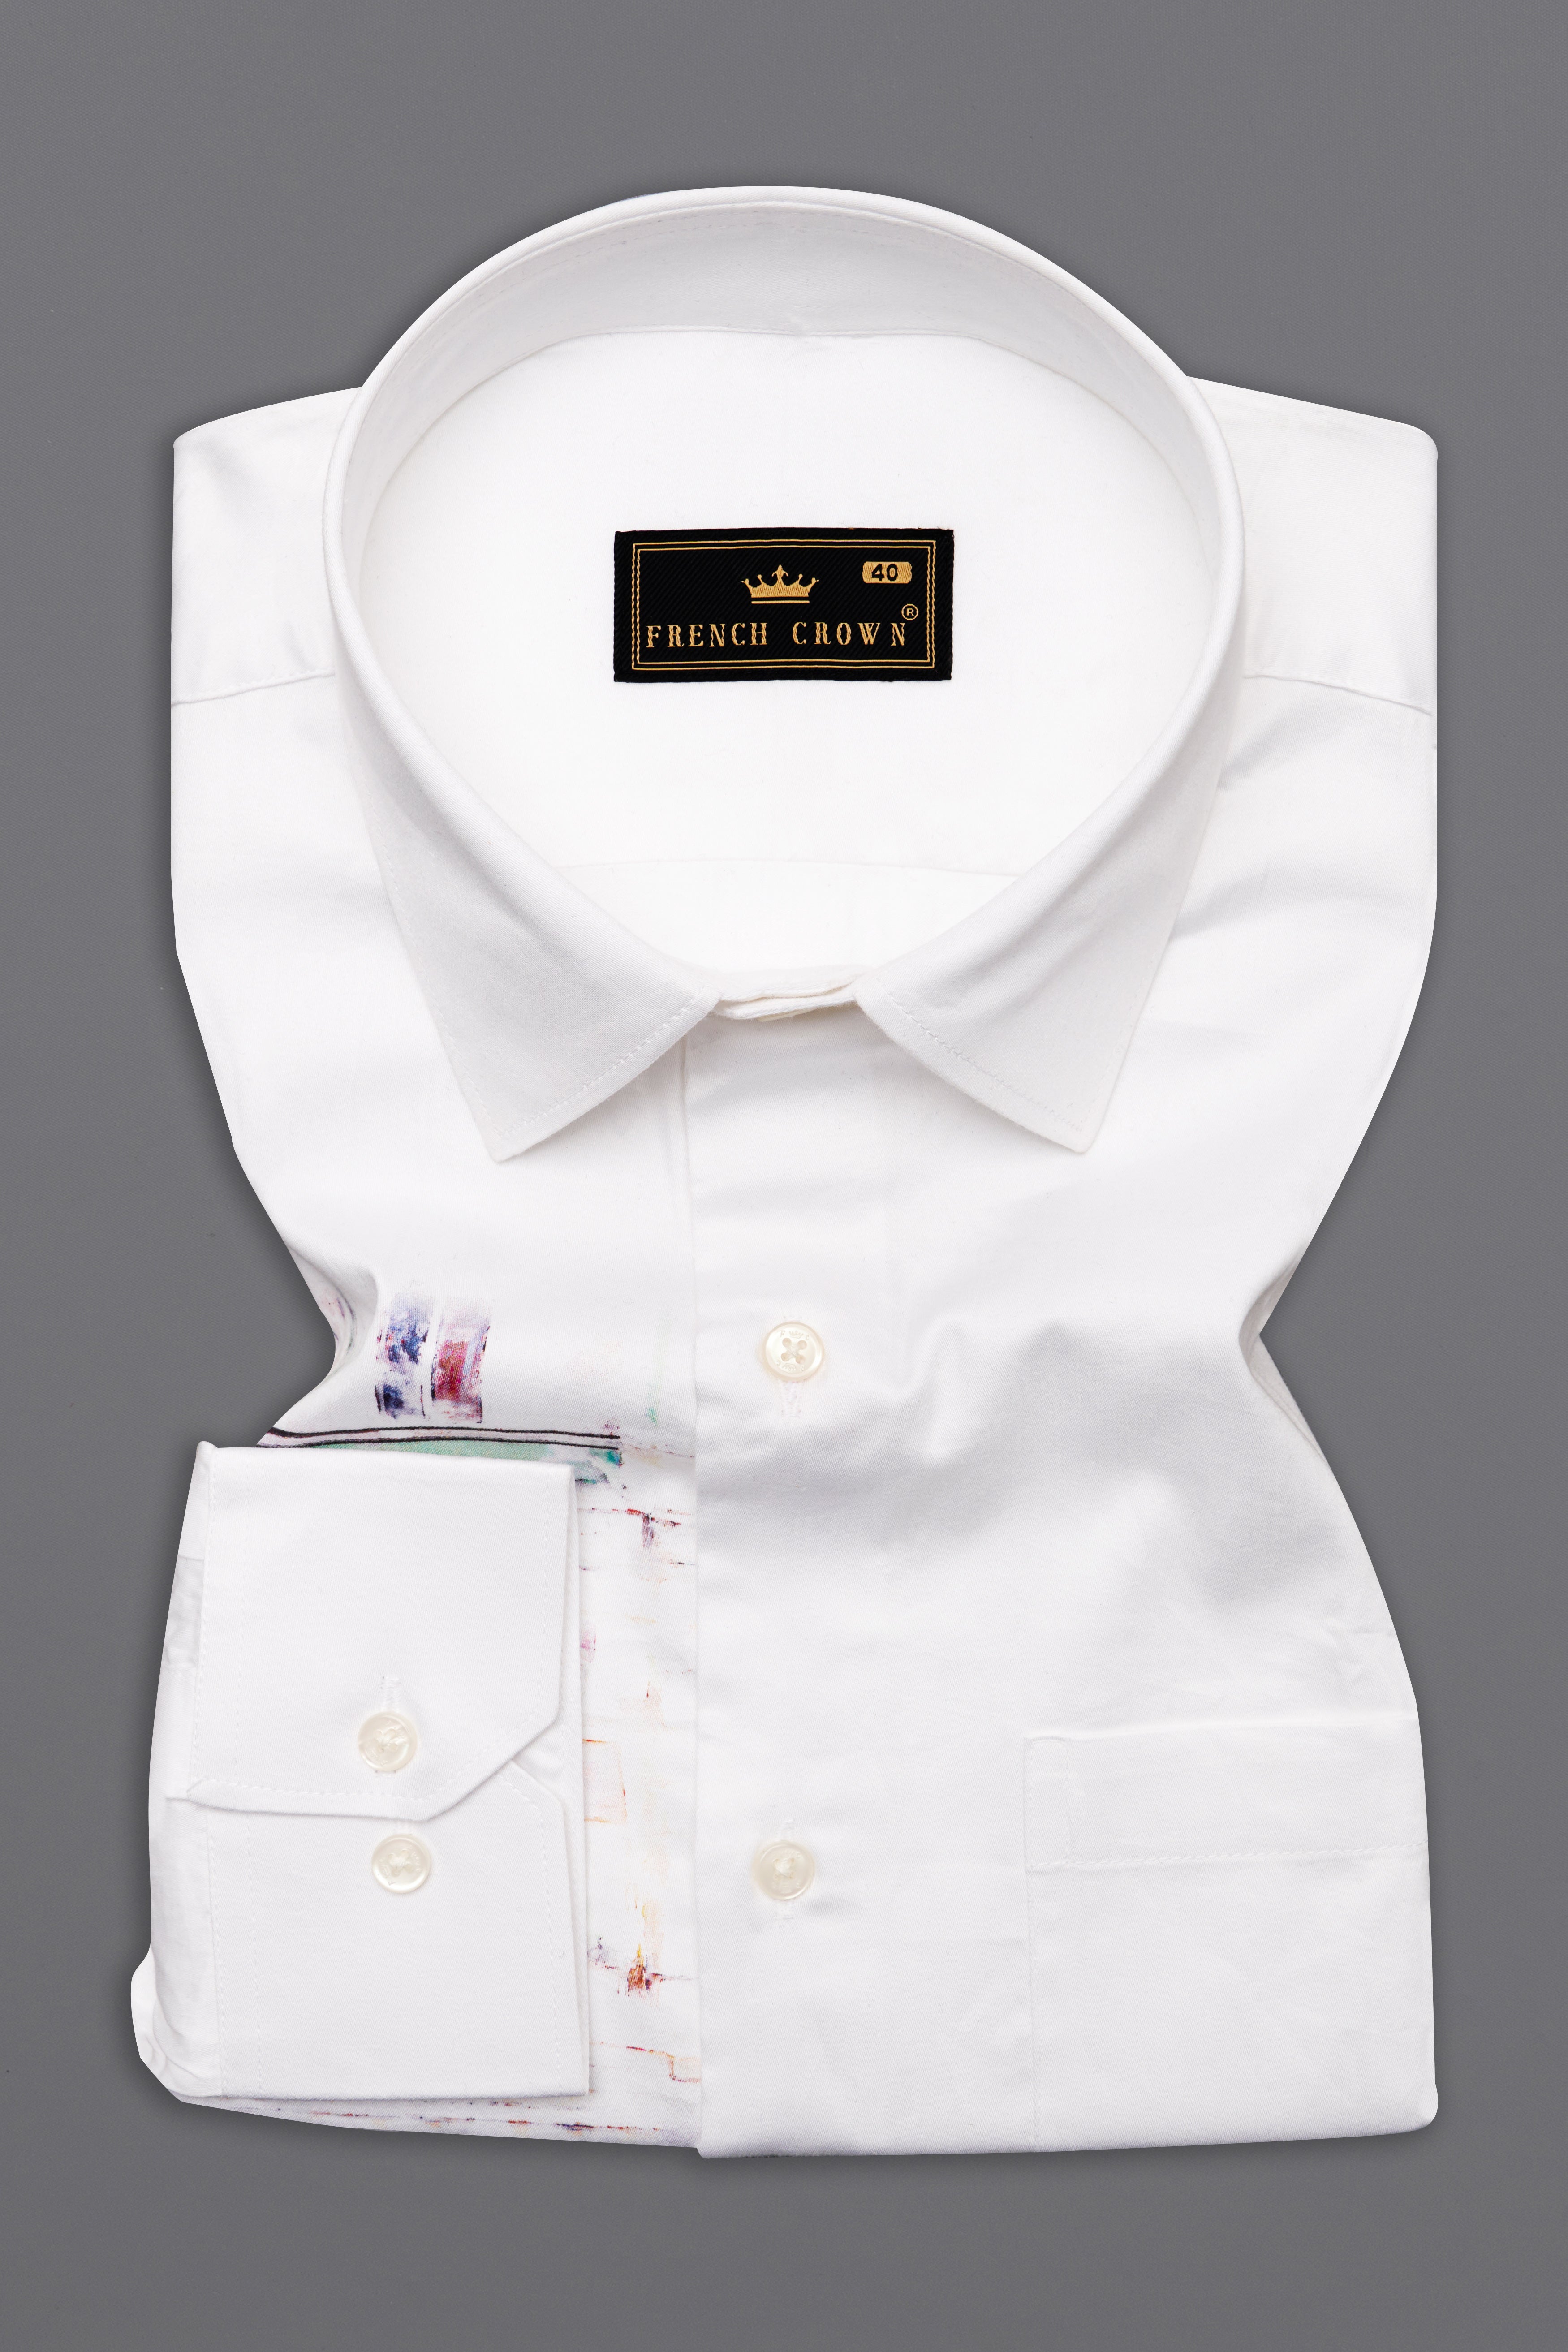 Bright White Printed Super Soft Premium Cotton Designer Shirt 10172-38, 10172-H-38, 10172-39, 10172-H-39, 10172-40, 10172-H-40, 10172-42, 10172-H-42, 10172-44, 10172-H-44, 10172-46, 10172-H-46, 10172-48, 10172-H-48, 10172-50, 10172-H-50, 10172-52, 10172-H-52A